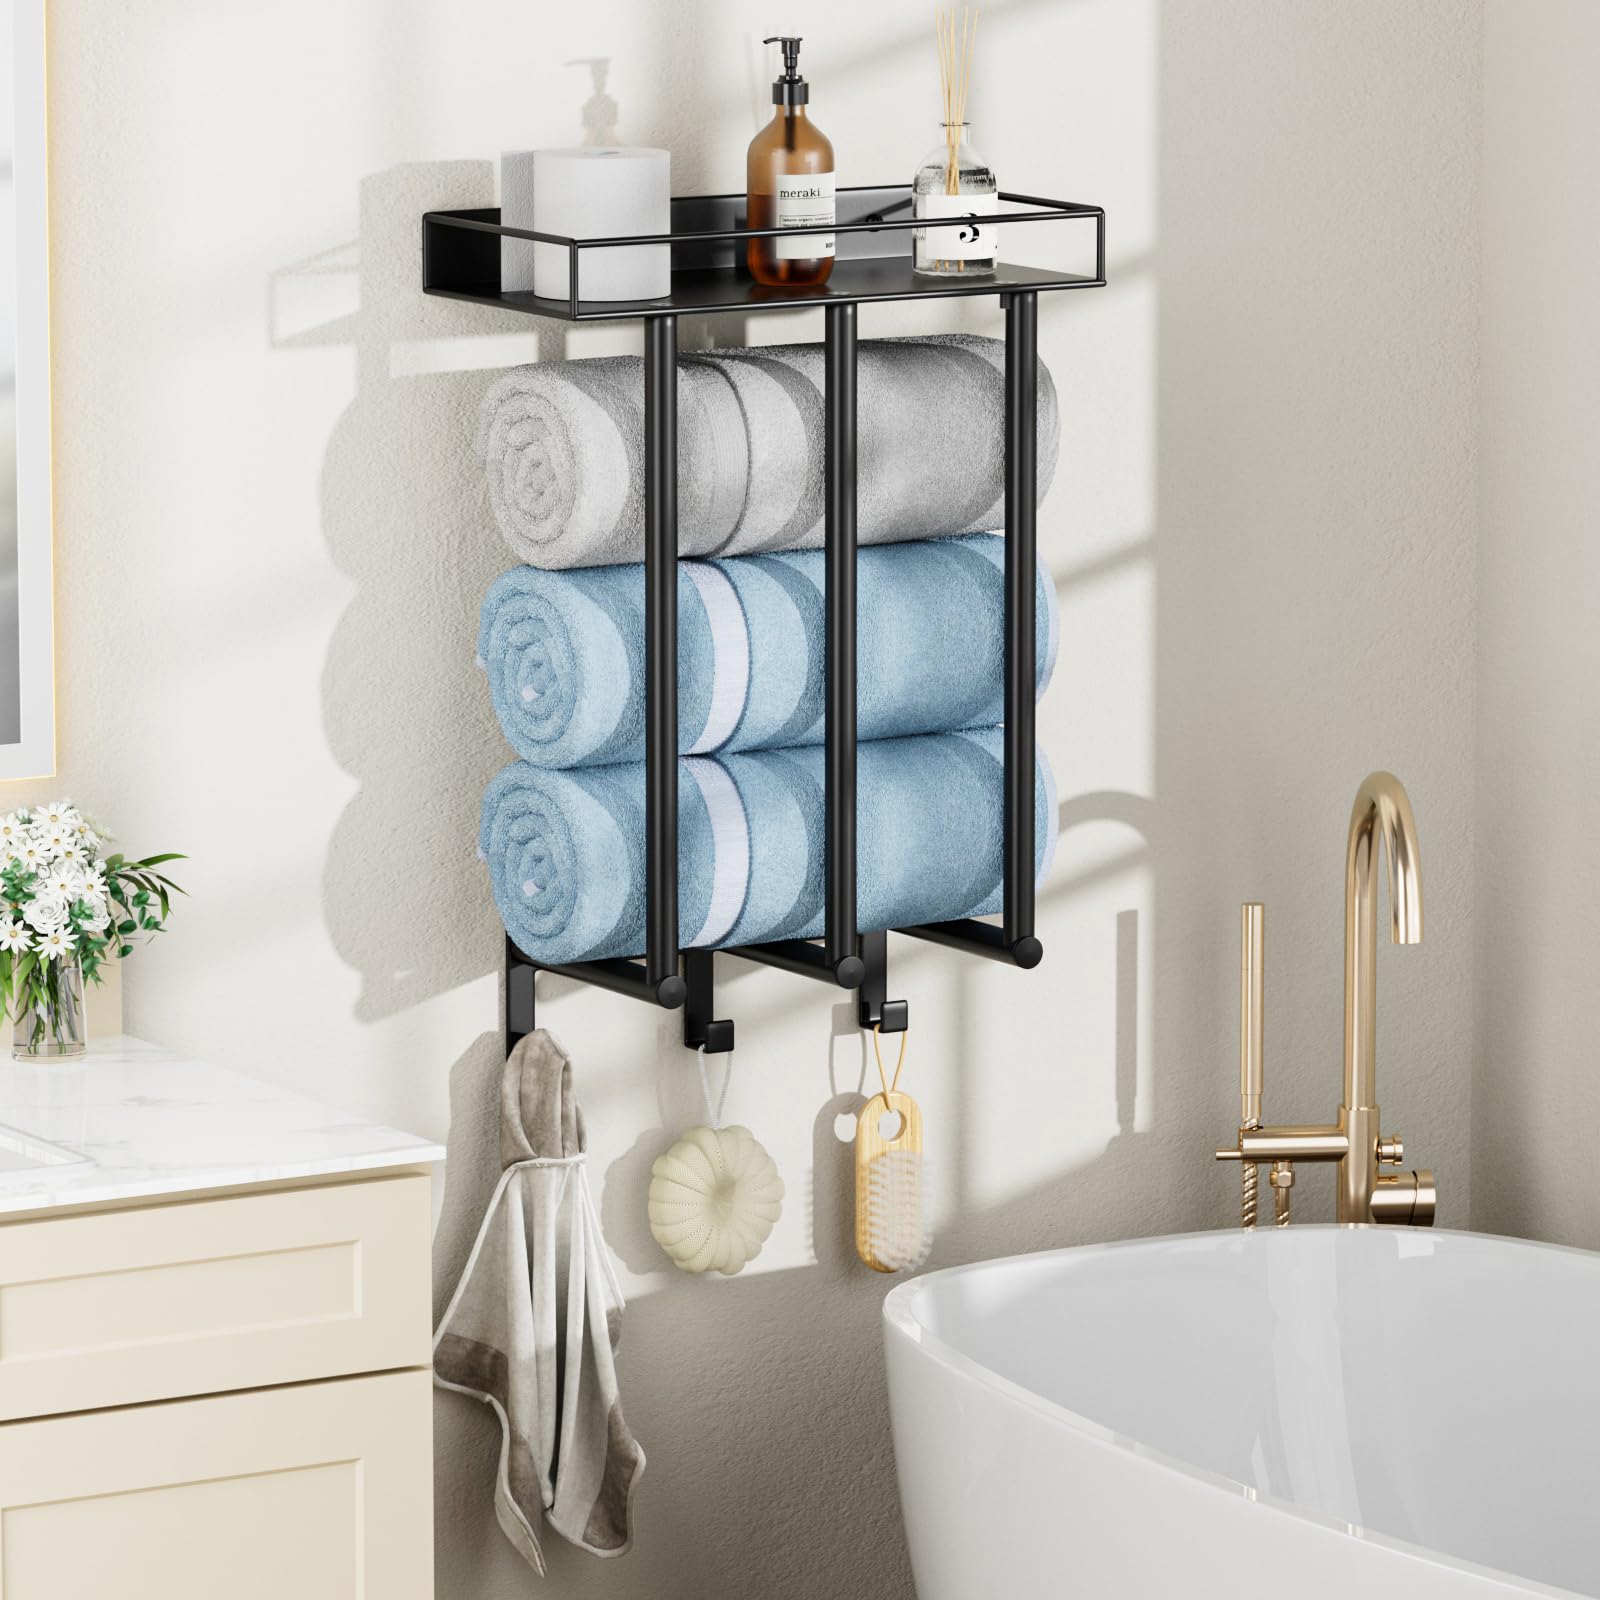 Ovicar Towel Racks for Bathroom - Wall Mounted Towel Rack with Metal Shelf & 3 Hooks, 3 Bars Wall Towel Holder for Small Bathroom, Bath Towel Storage for Rolled Towels Organizer (Black)